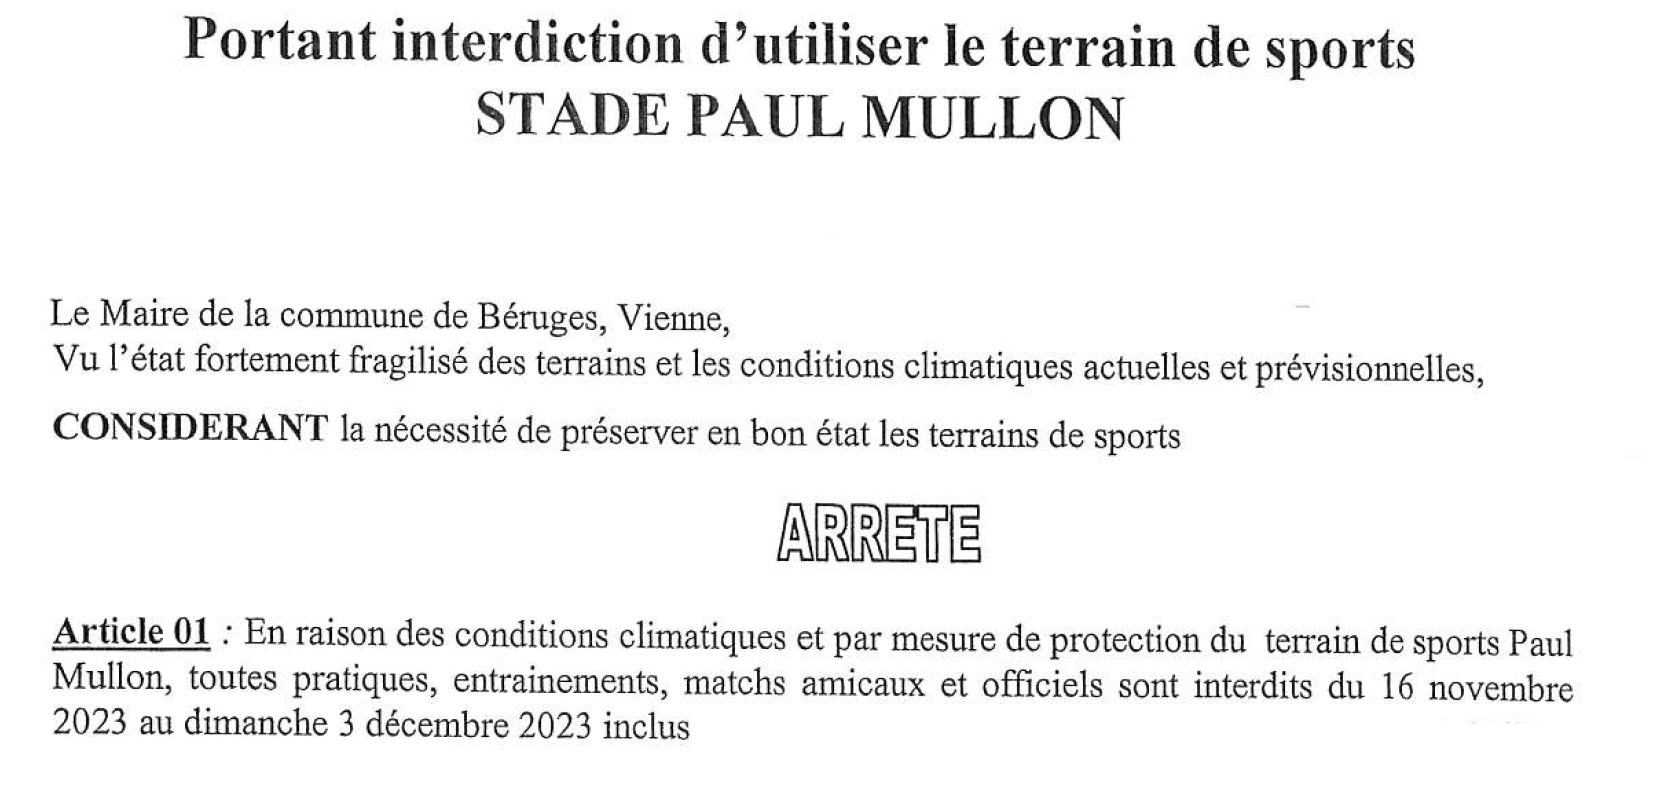 Interdiction d’utiliser le stade Paul Mullon